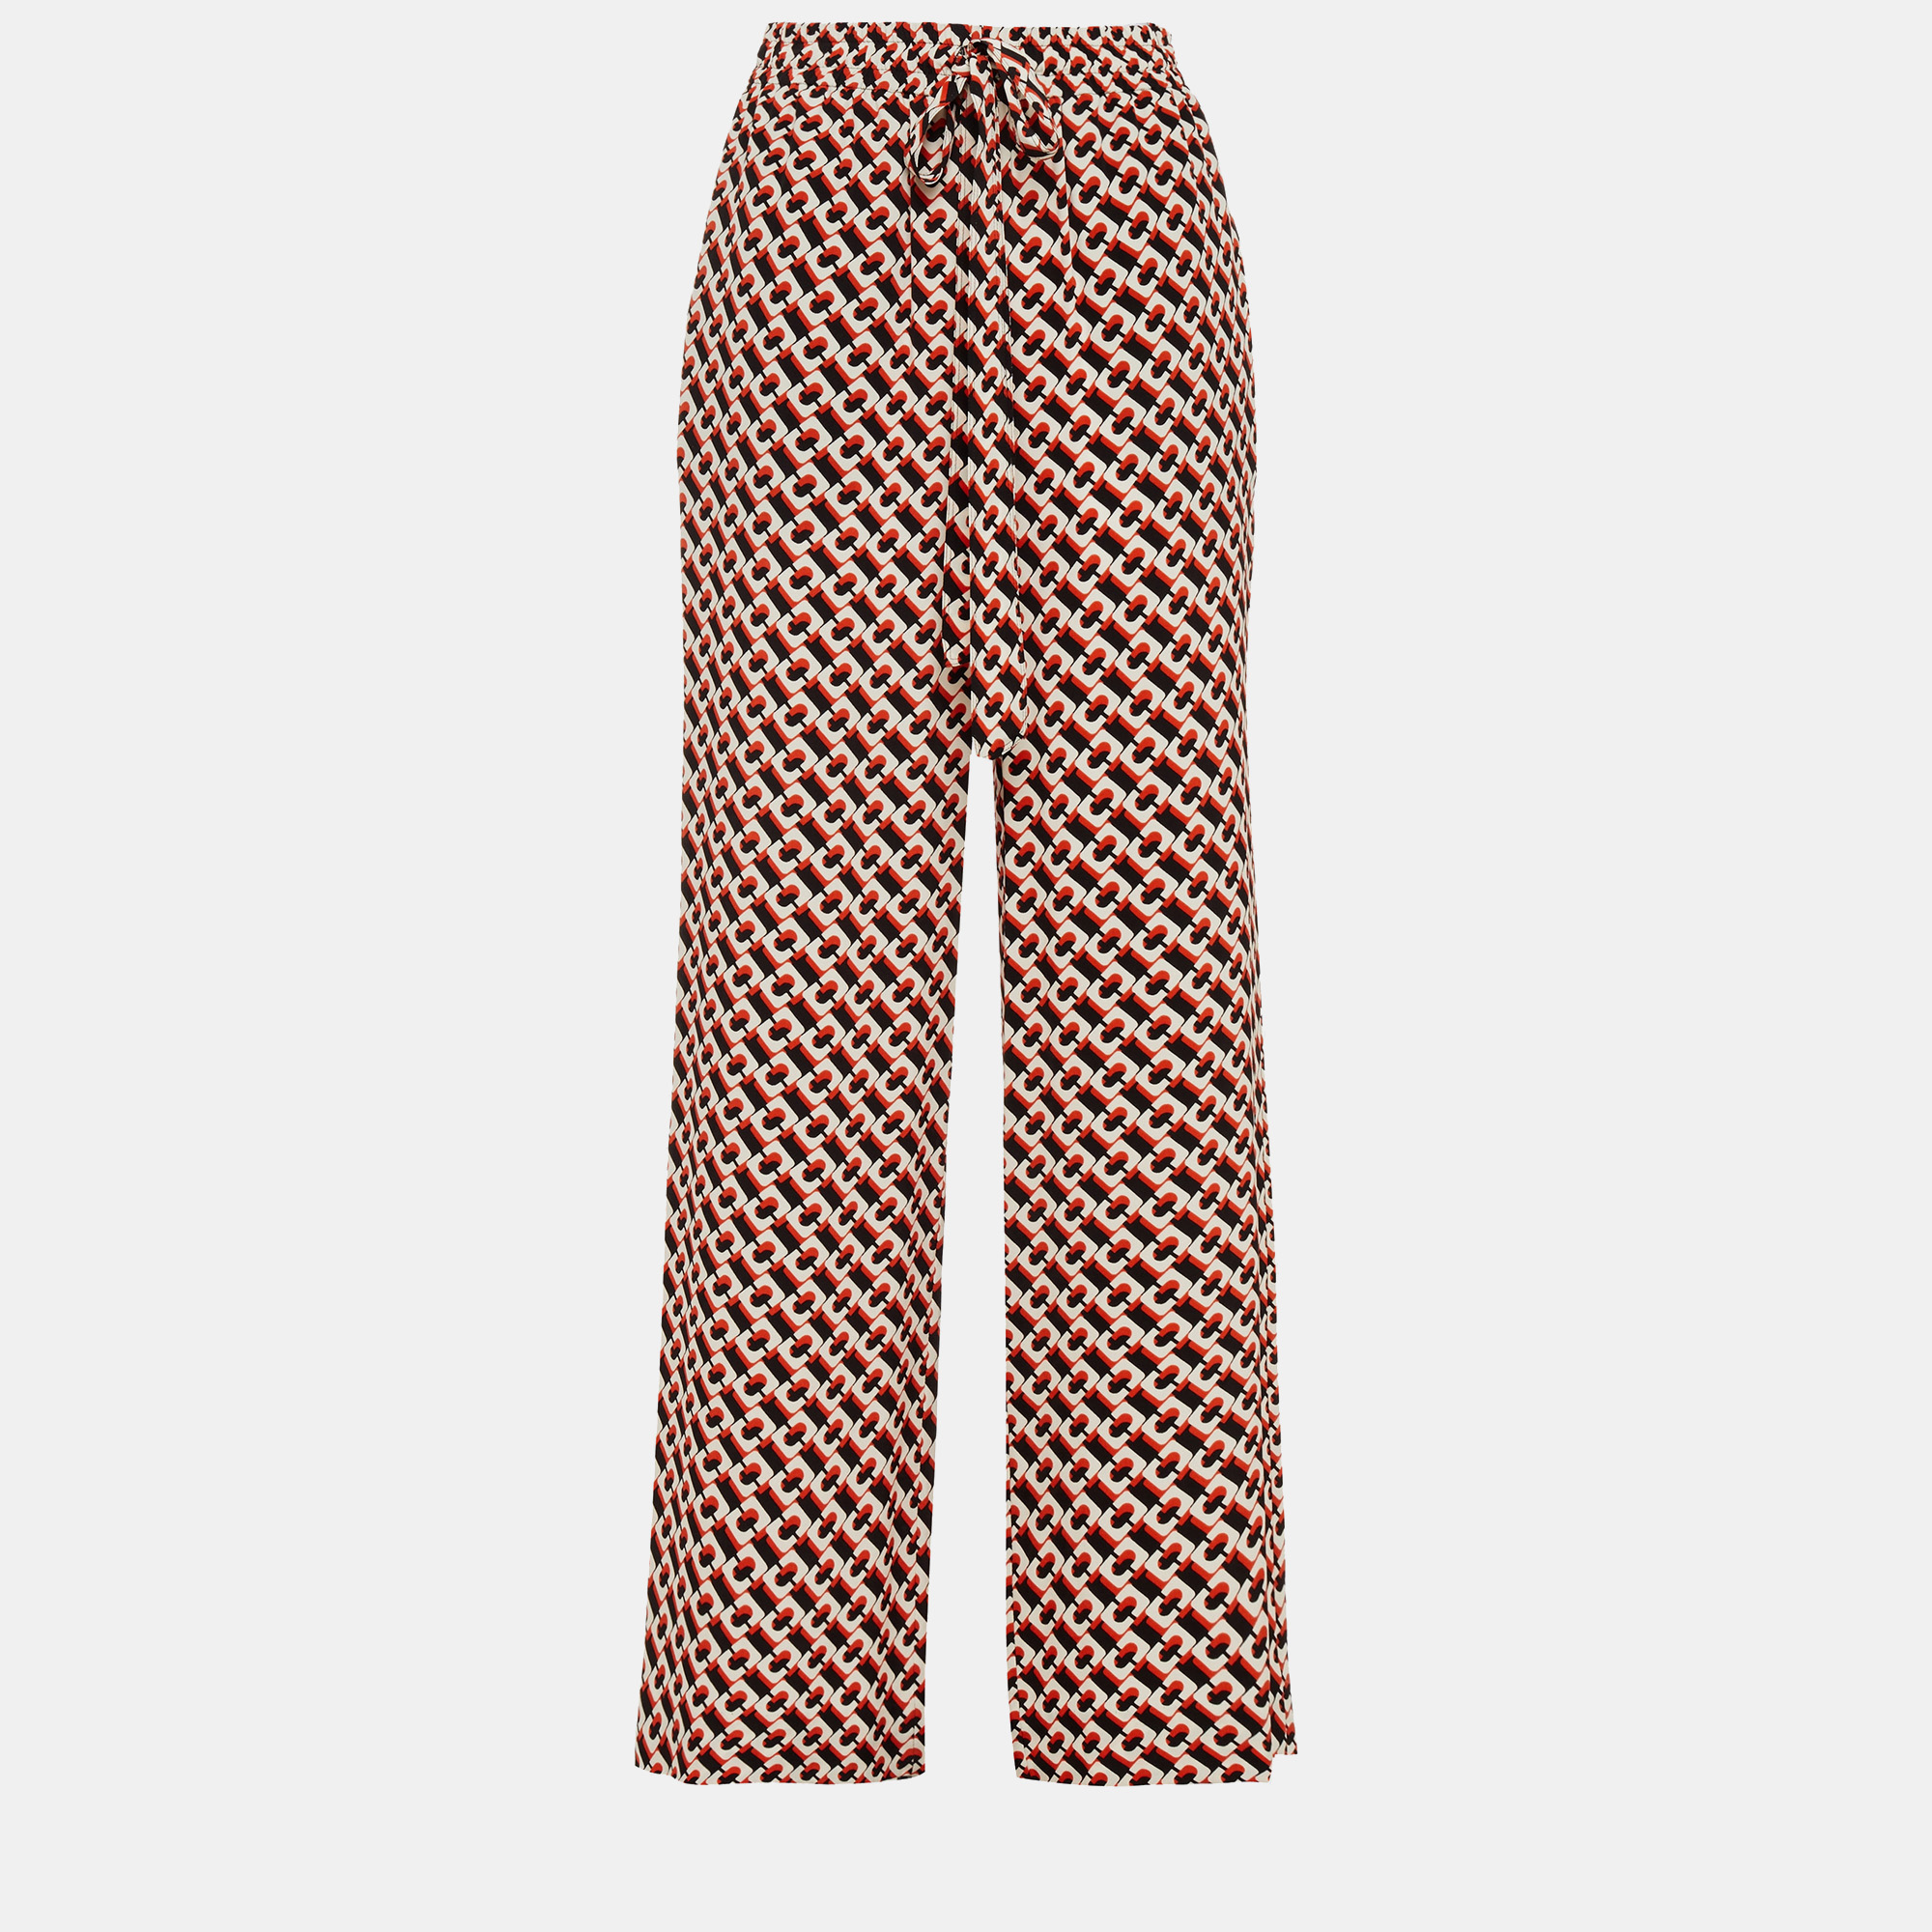 Diane von furstenberg multicolor printed silk wide leg pants xs